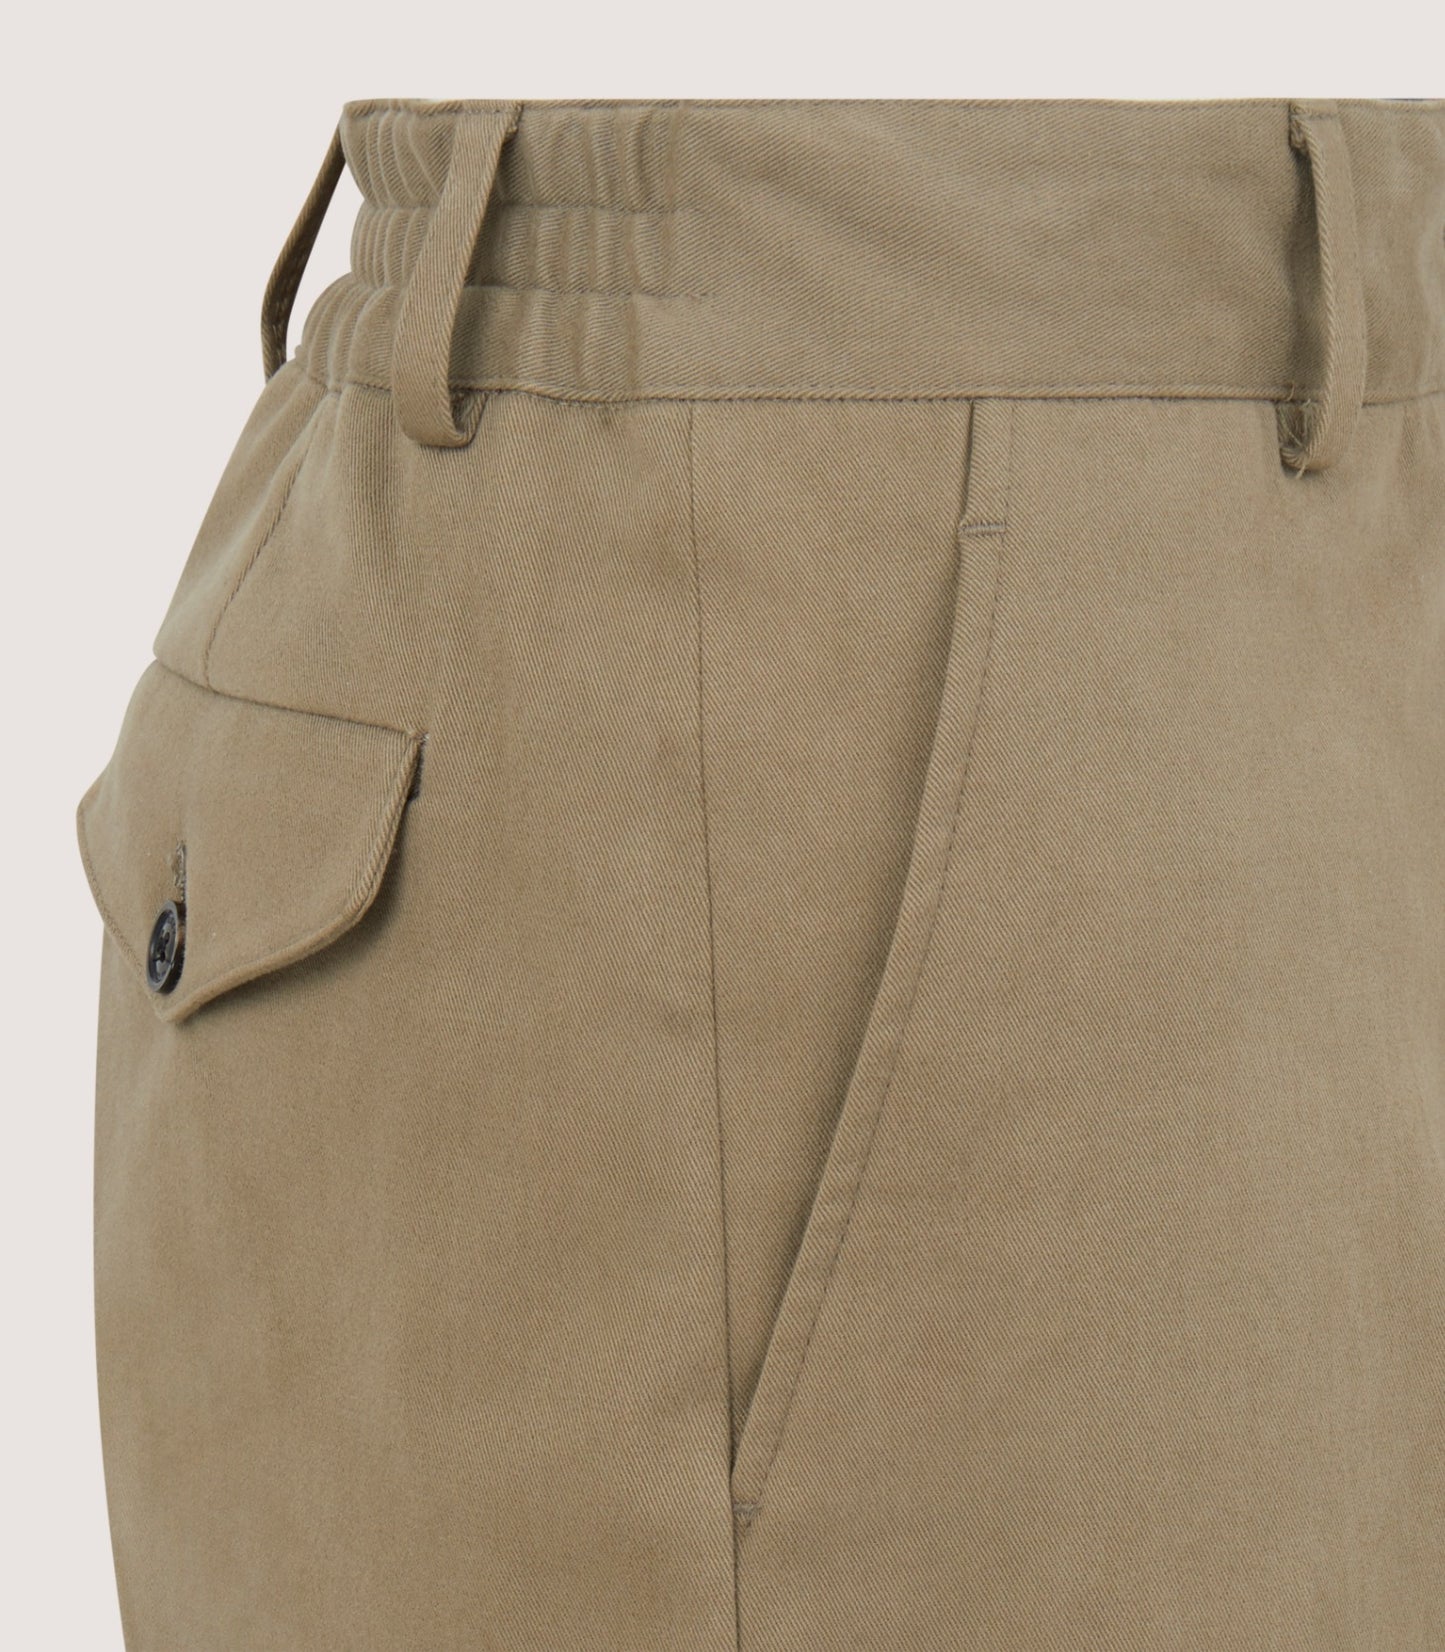 Women's Cotton Flat Front Trouser in Dark Olive